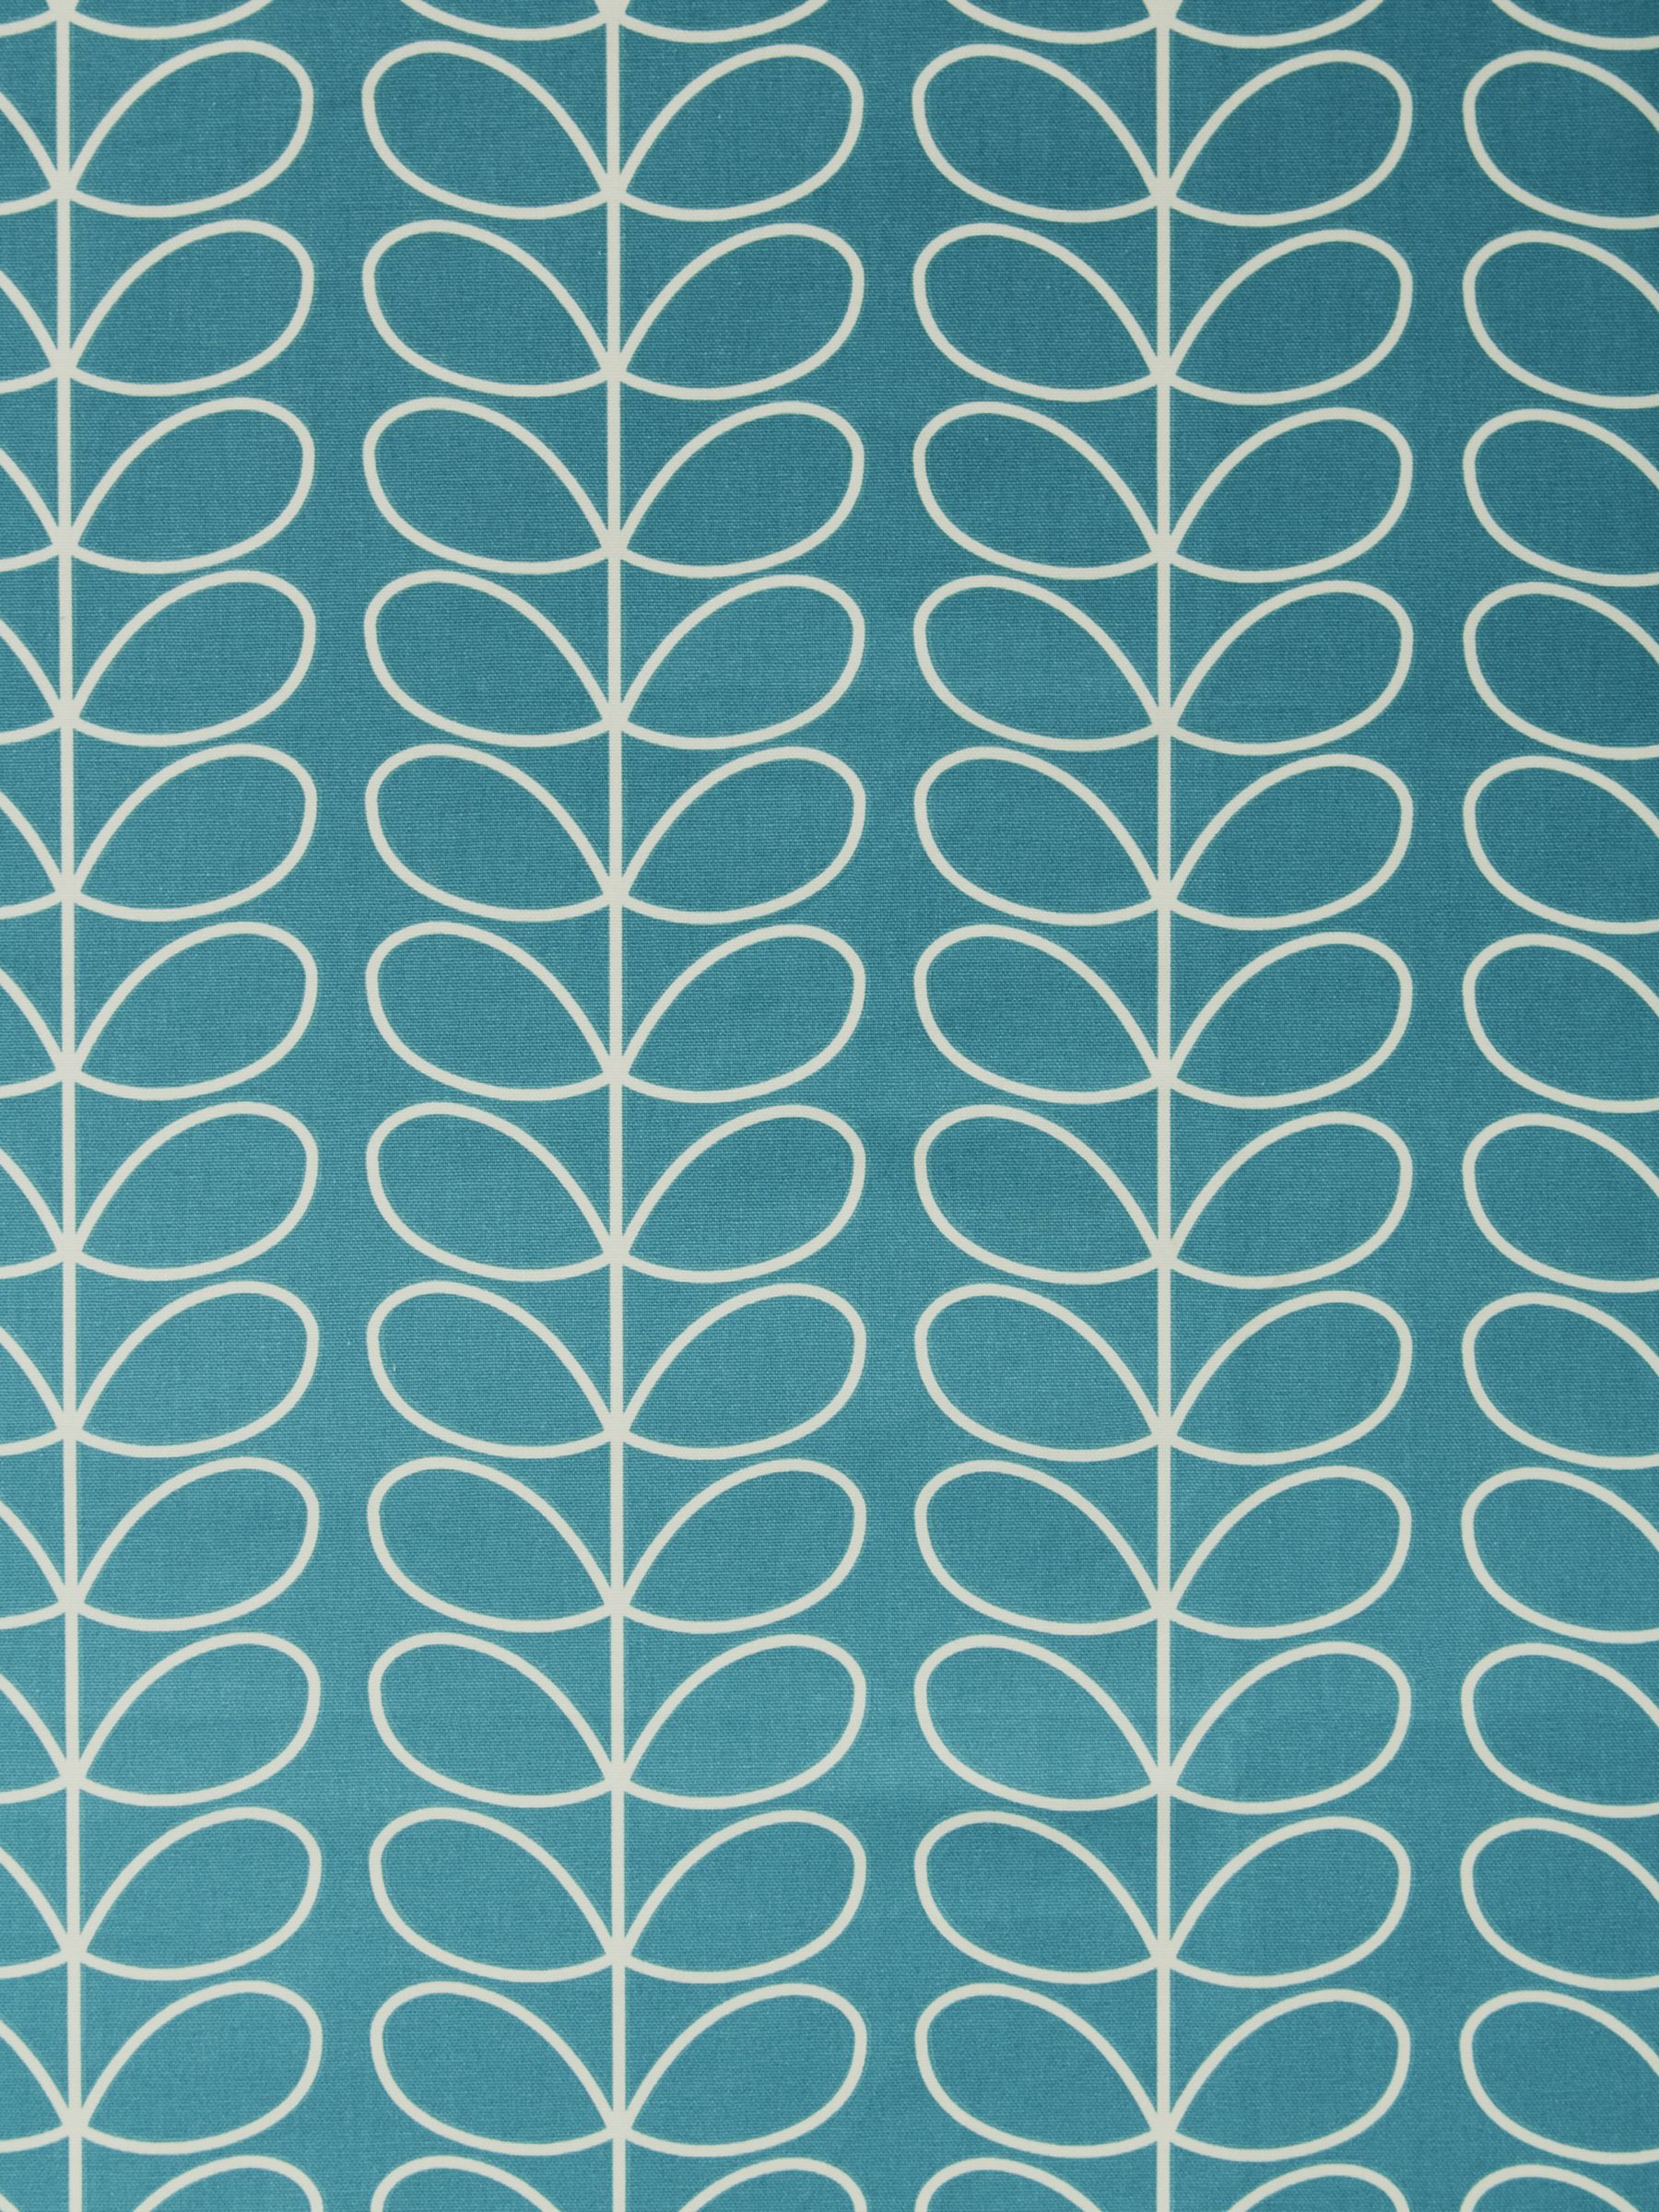 Orla Kiely Linear Stem Furnishing Fabric, Deep Duck Egg